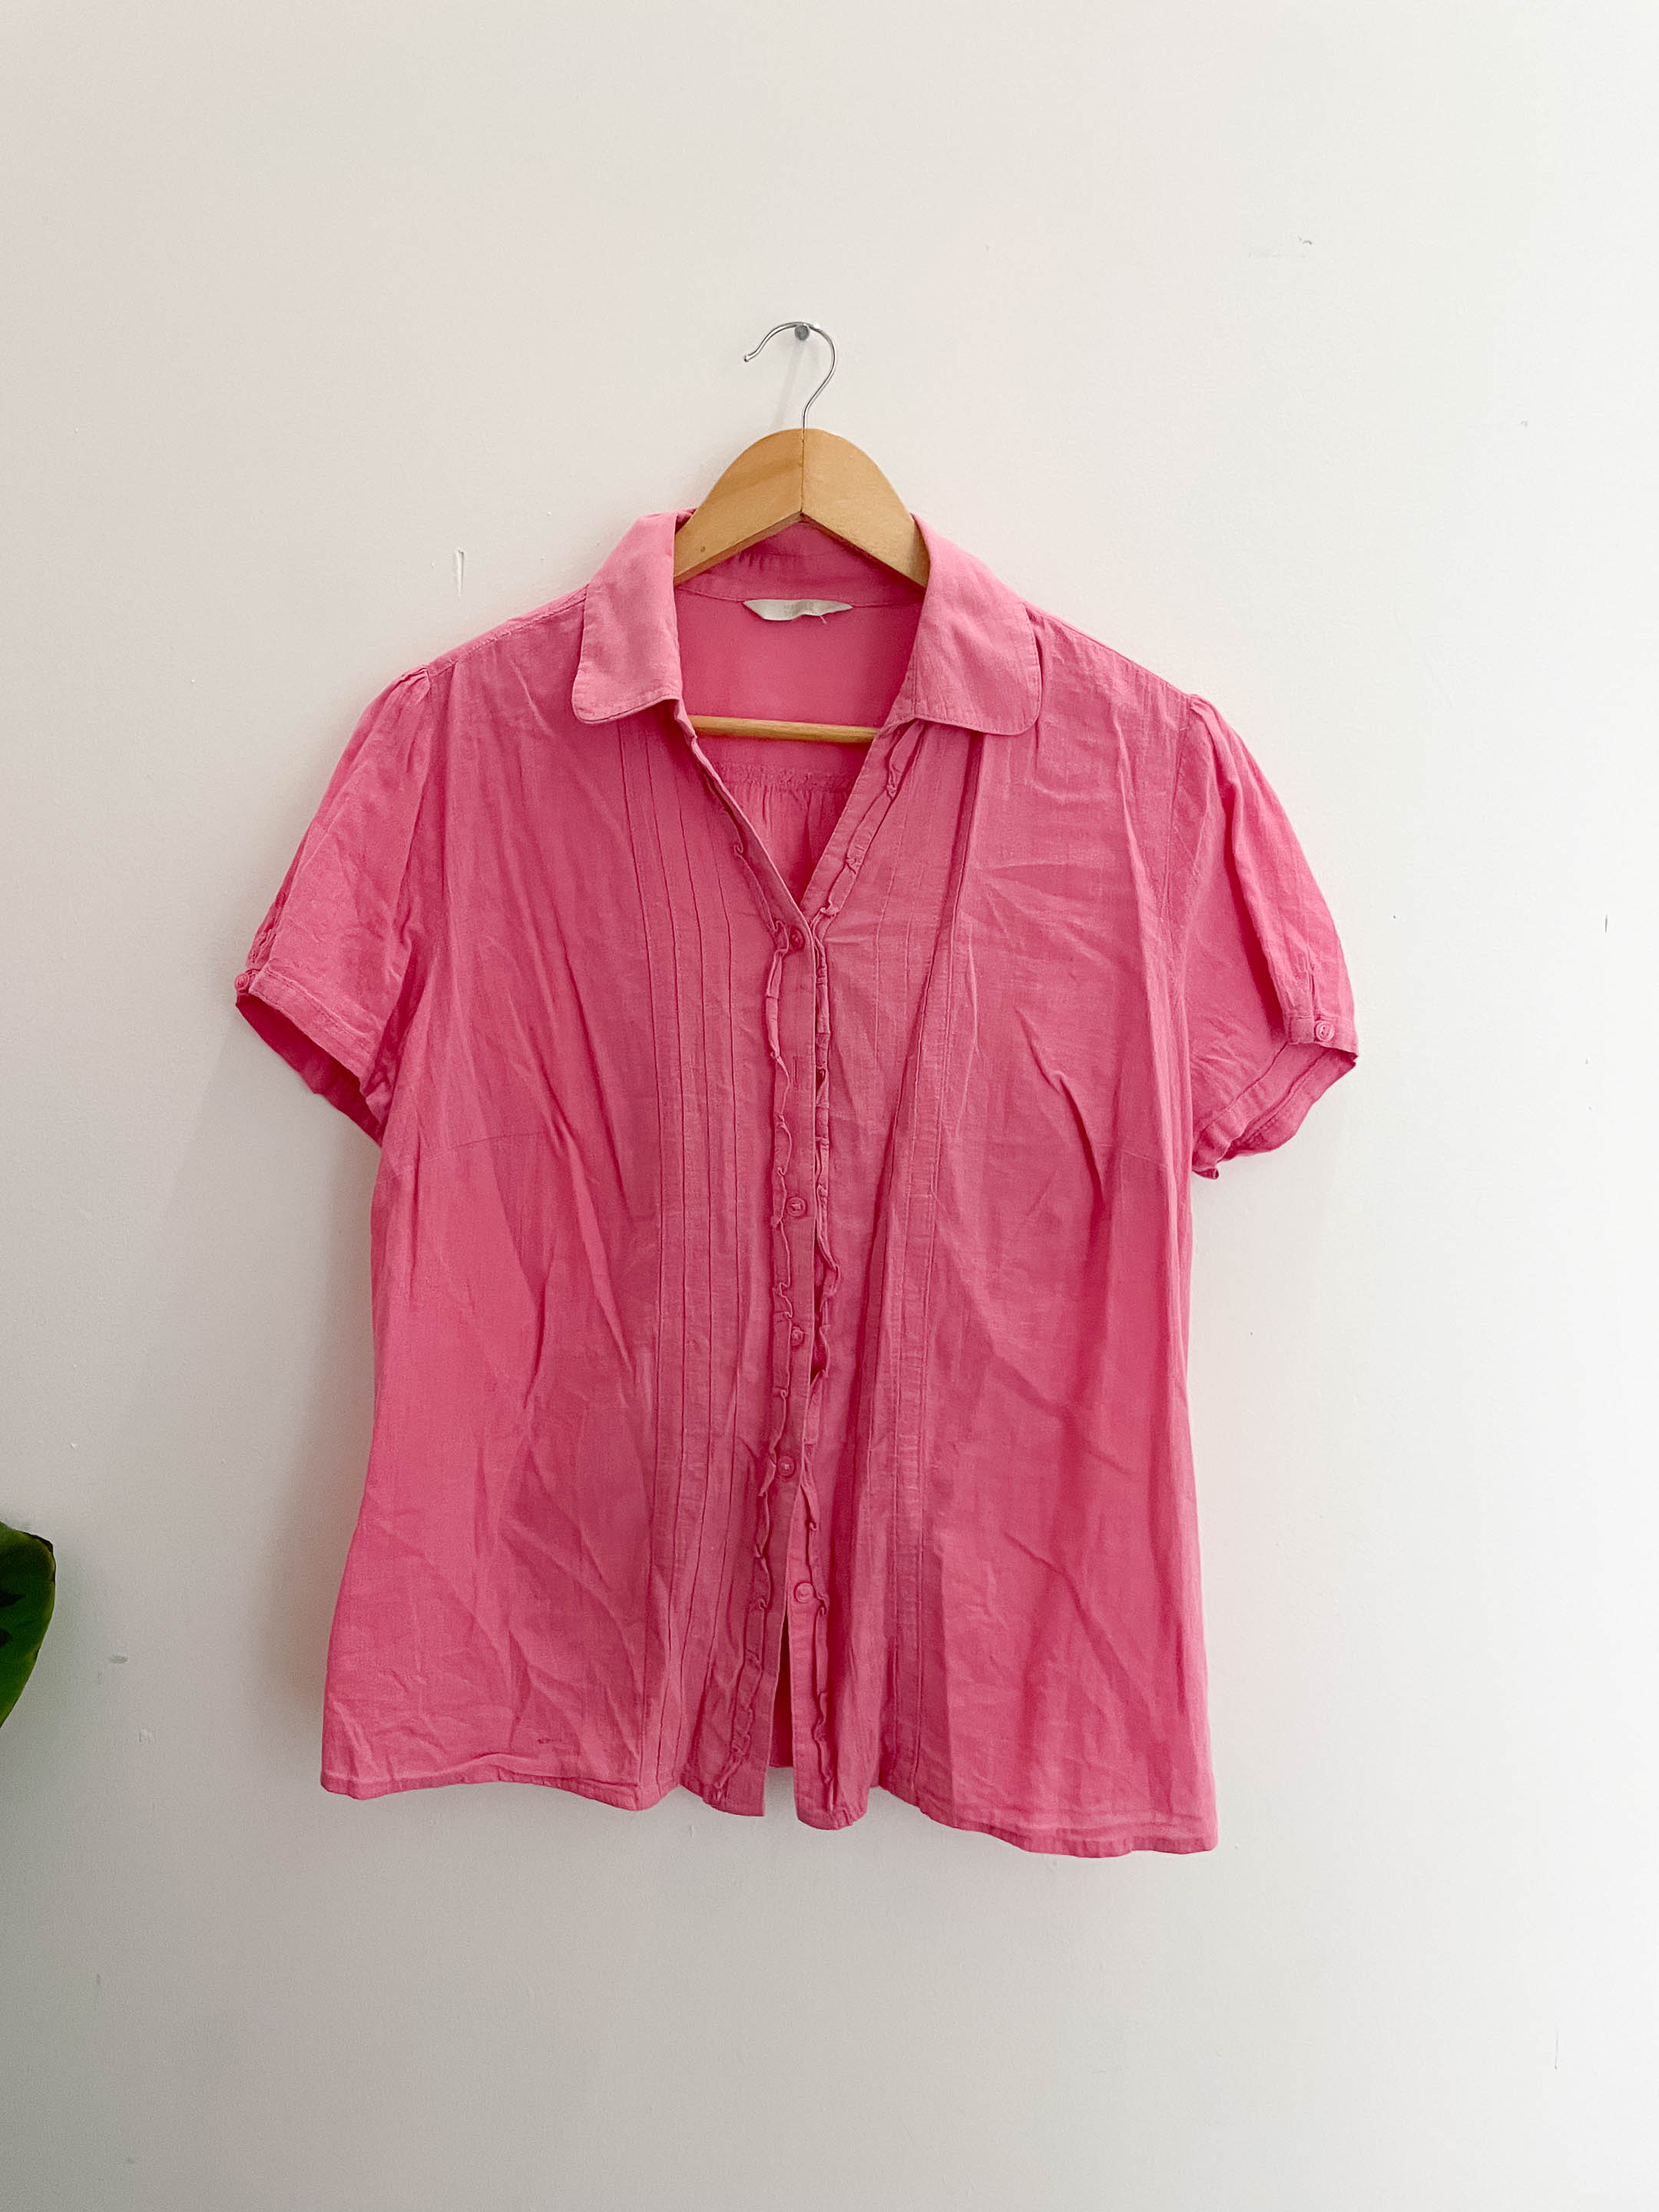 Vintage womens pink shirt size 16